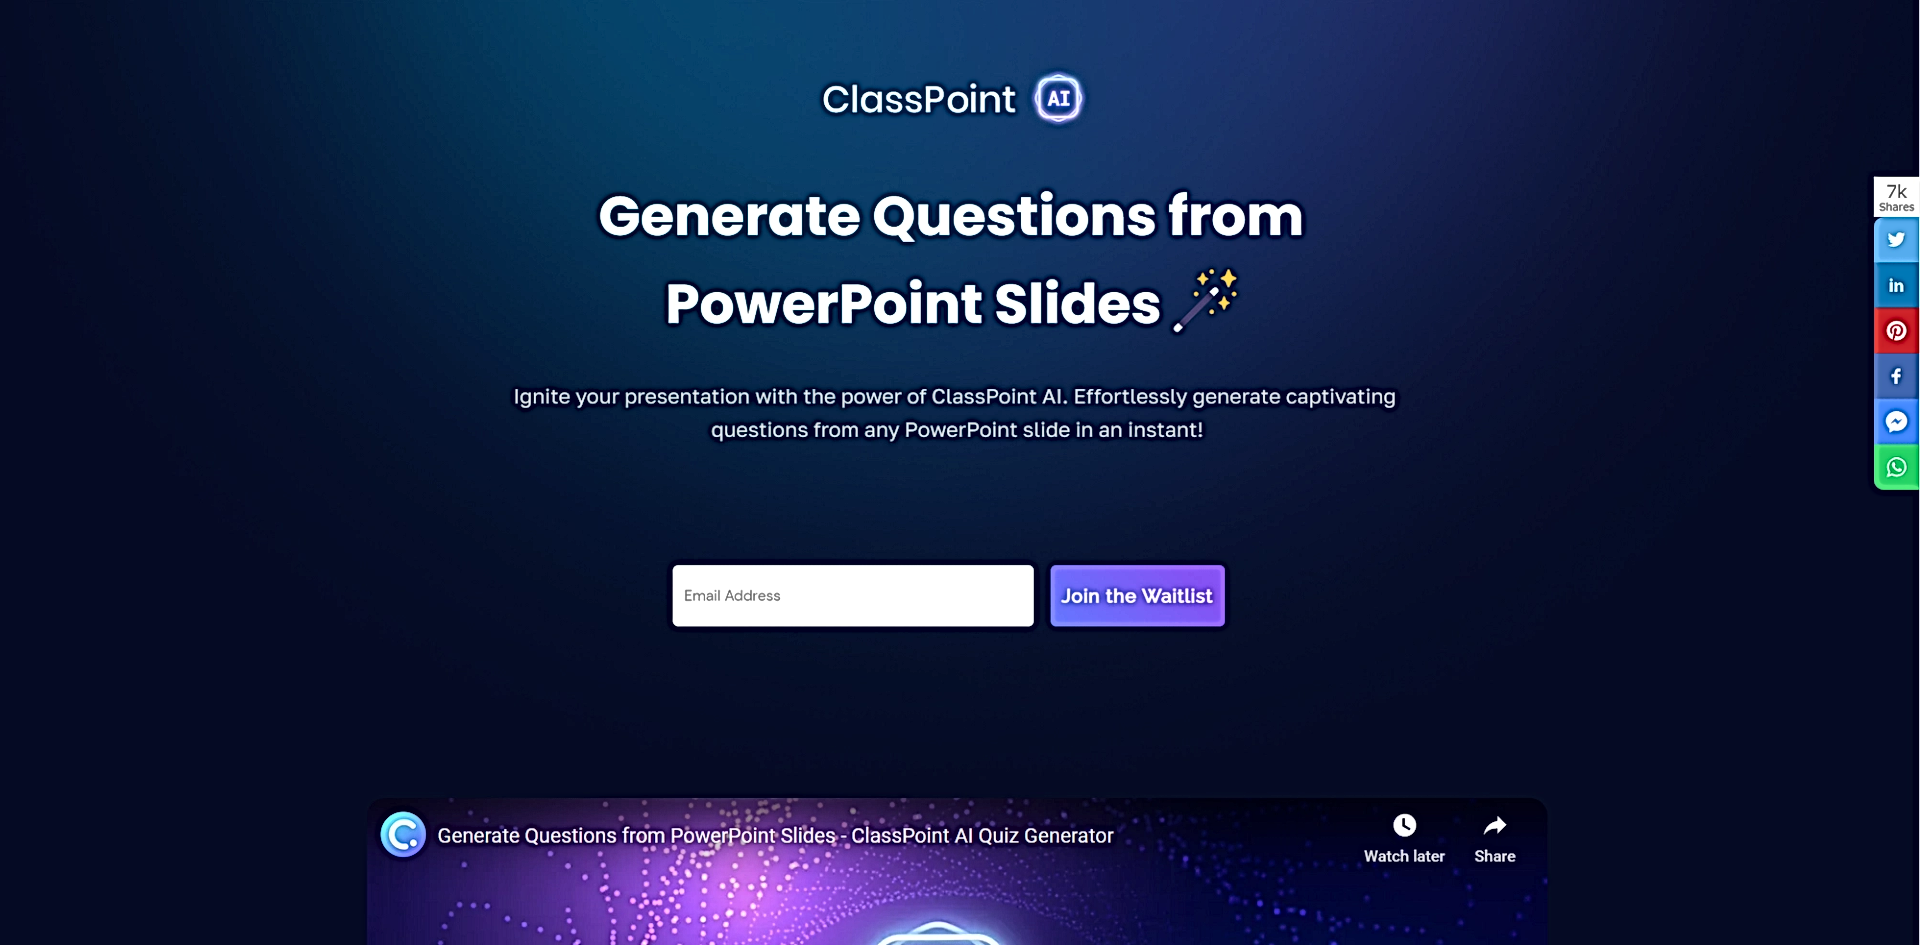 ClassPoint AI featured